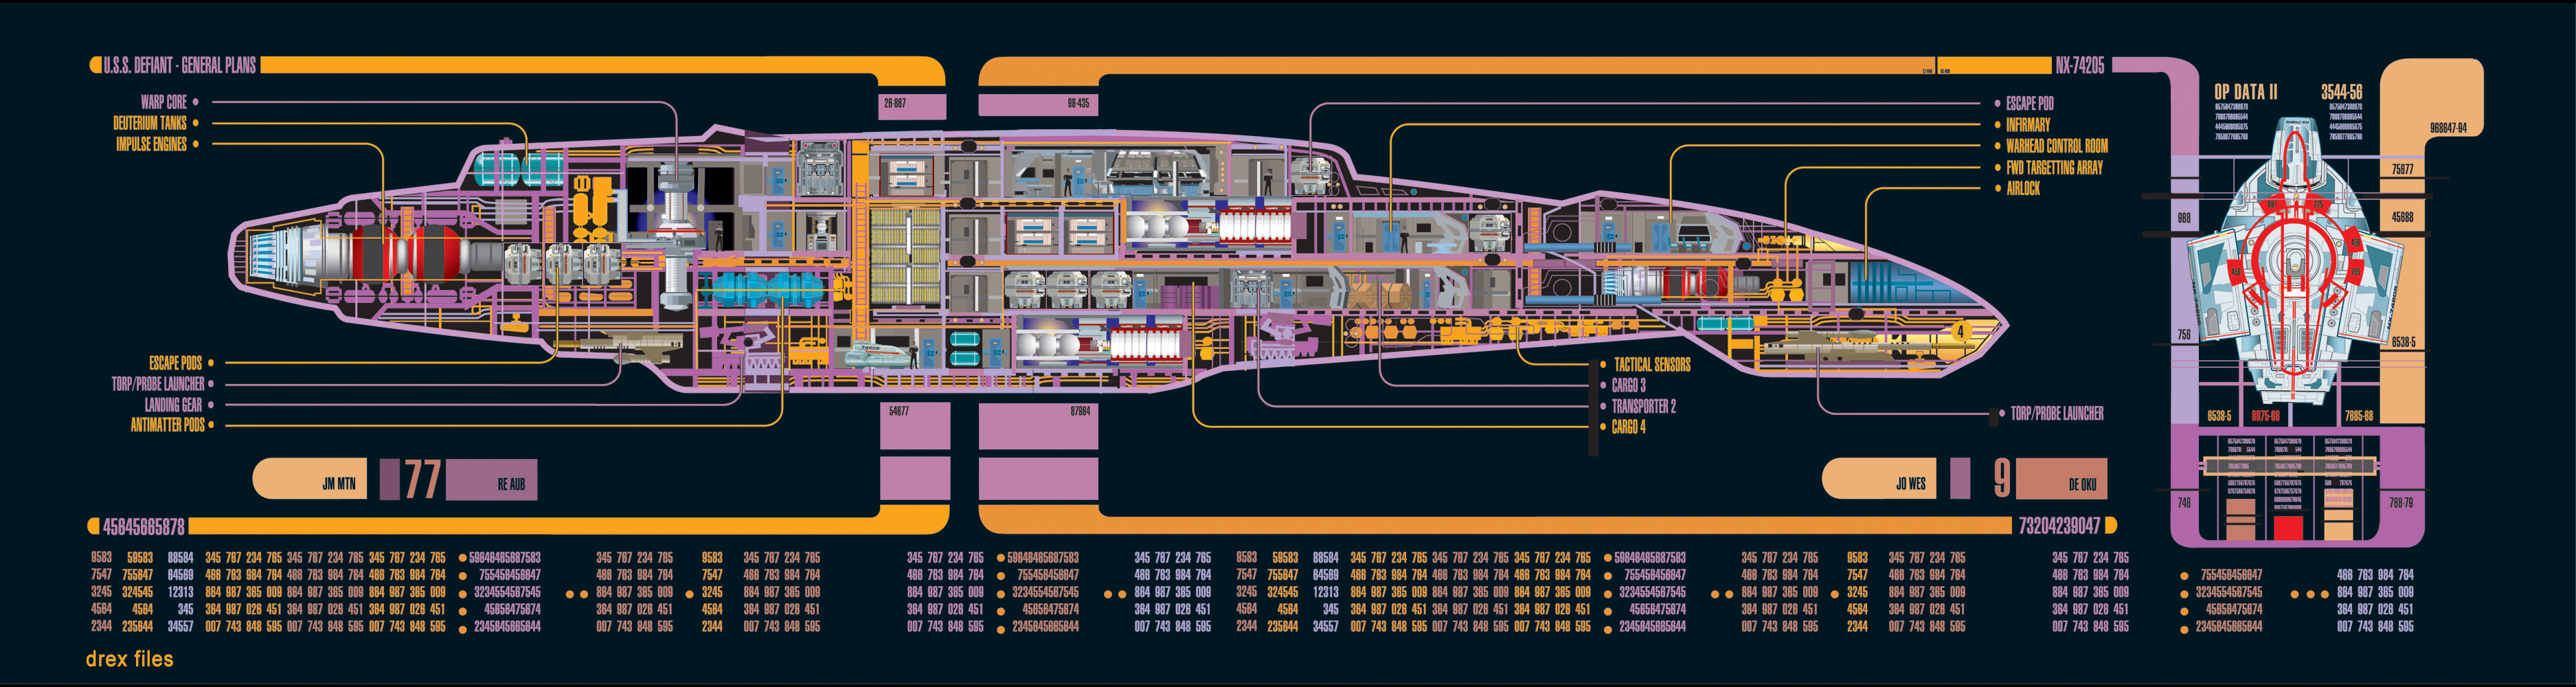 spaceship, USS Defiant, Deep Space 9 Wallpaper